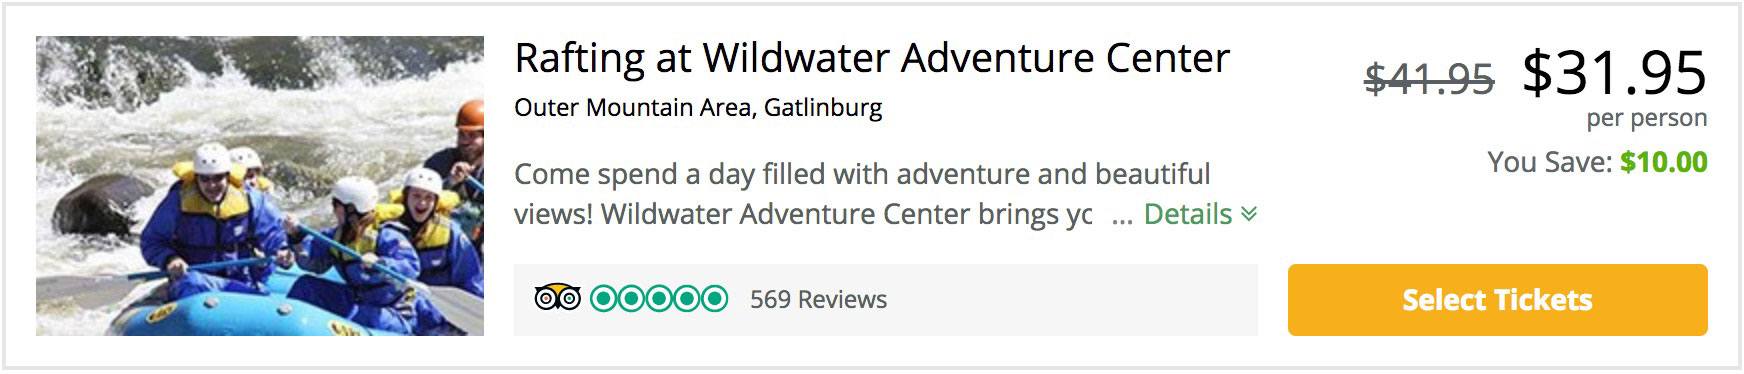 wildwater adventure center discount